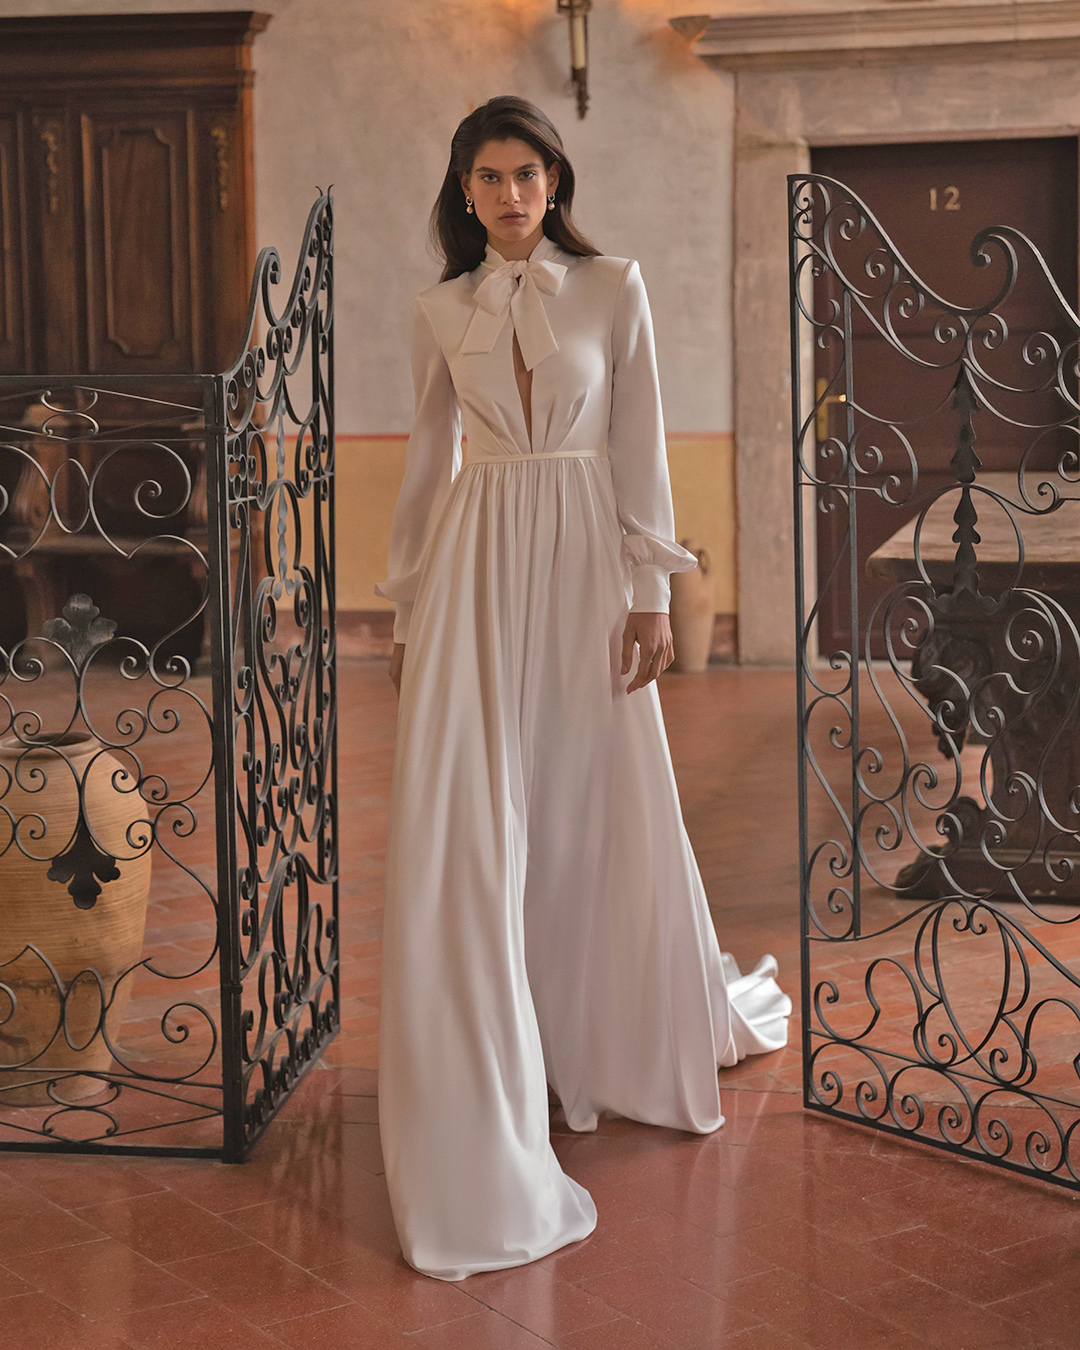 modest wedding dresses simple with long sleeves a line eva lendel